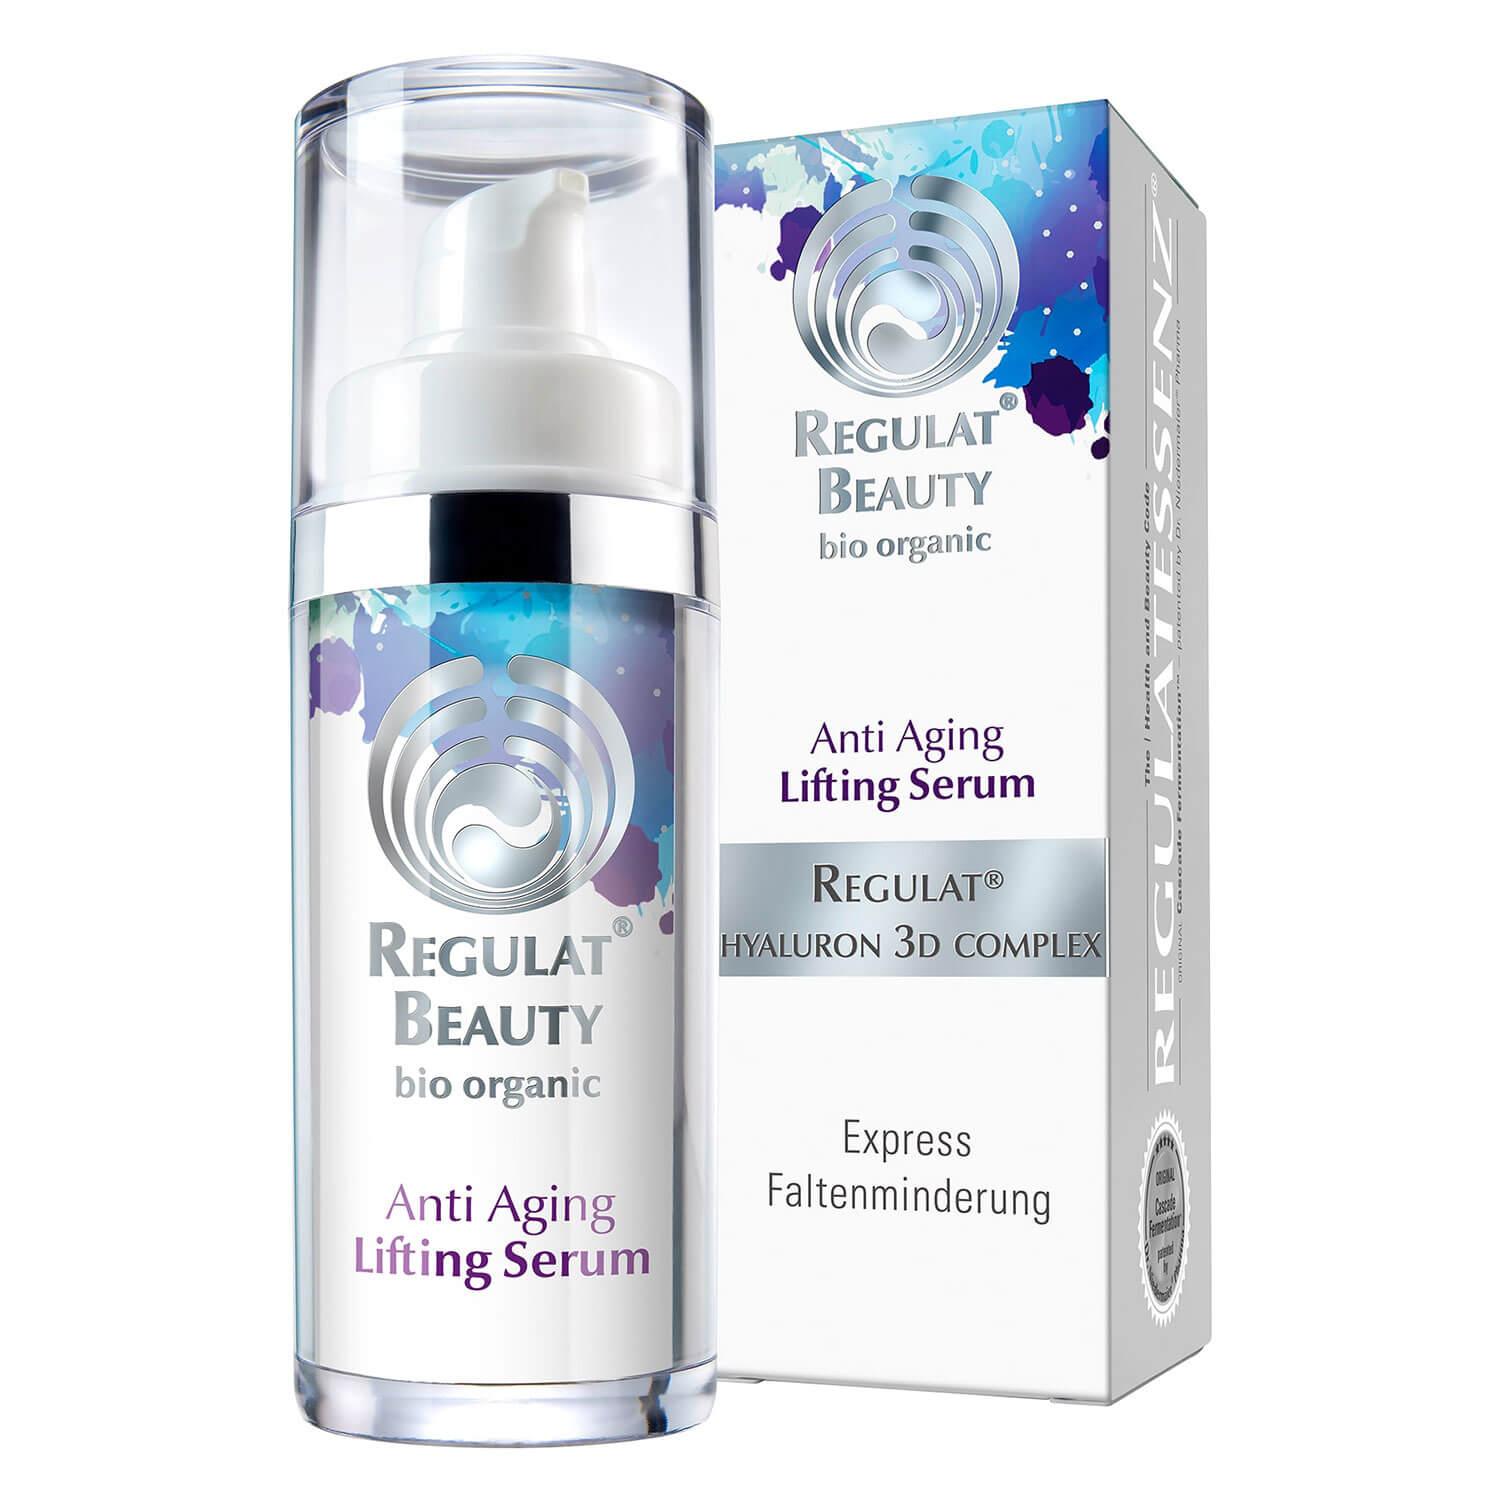 Regulat® Beauty - Anti Aging Lifting Serum